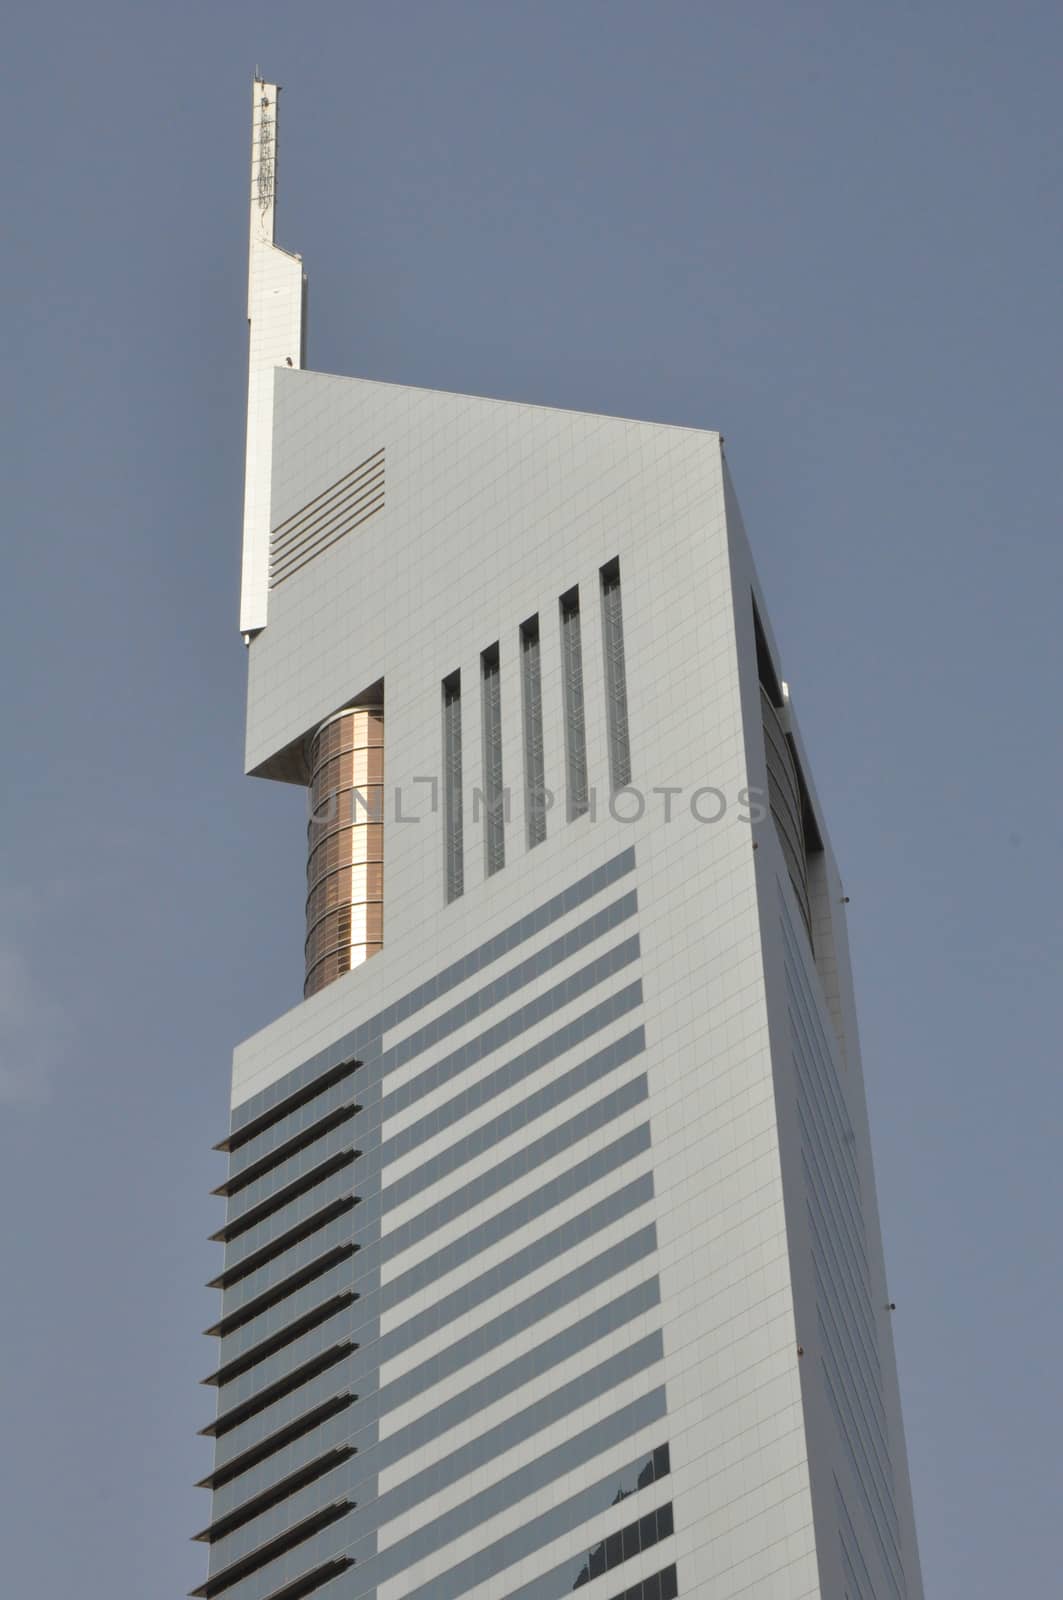 Emirates Towers in Dubai, United Arab Emirates (UAE) by sainaniritu